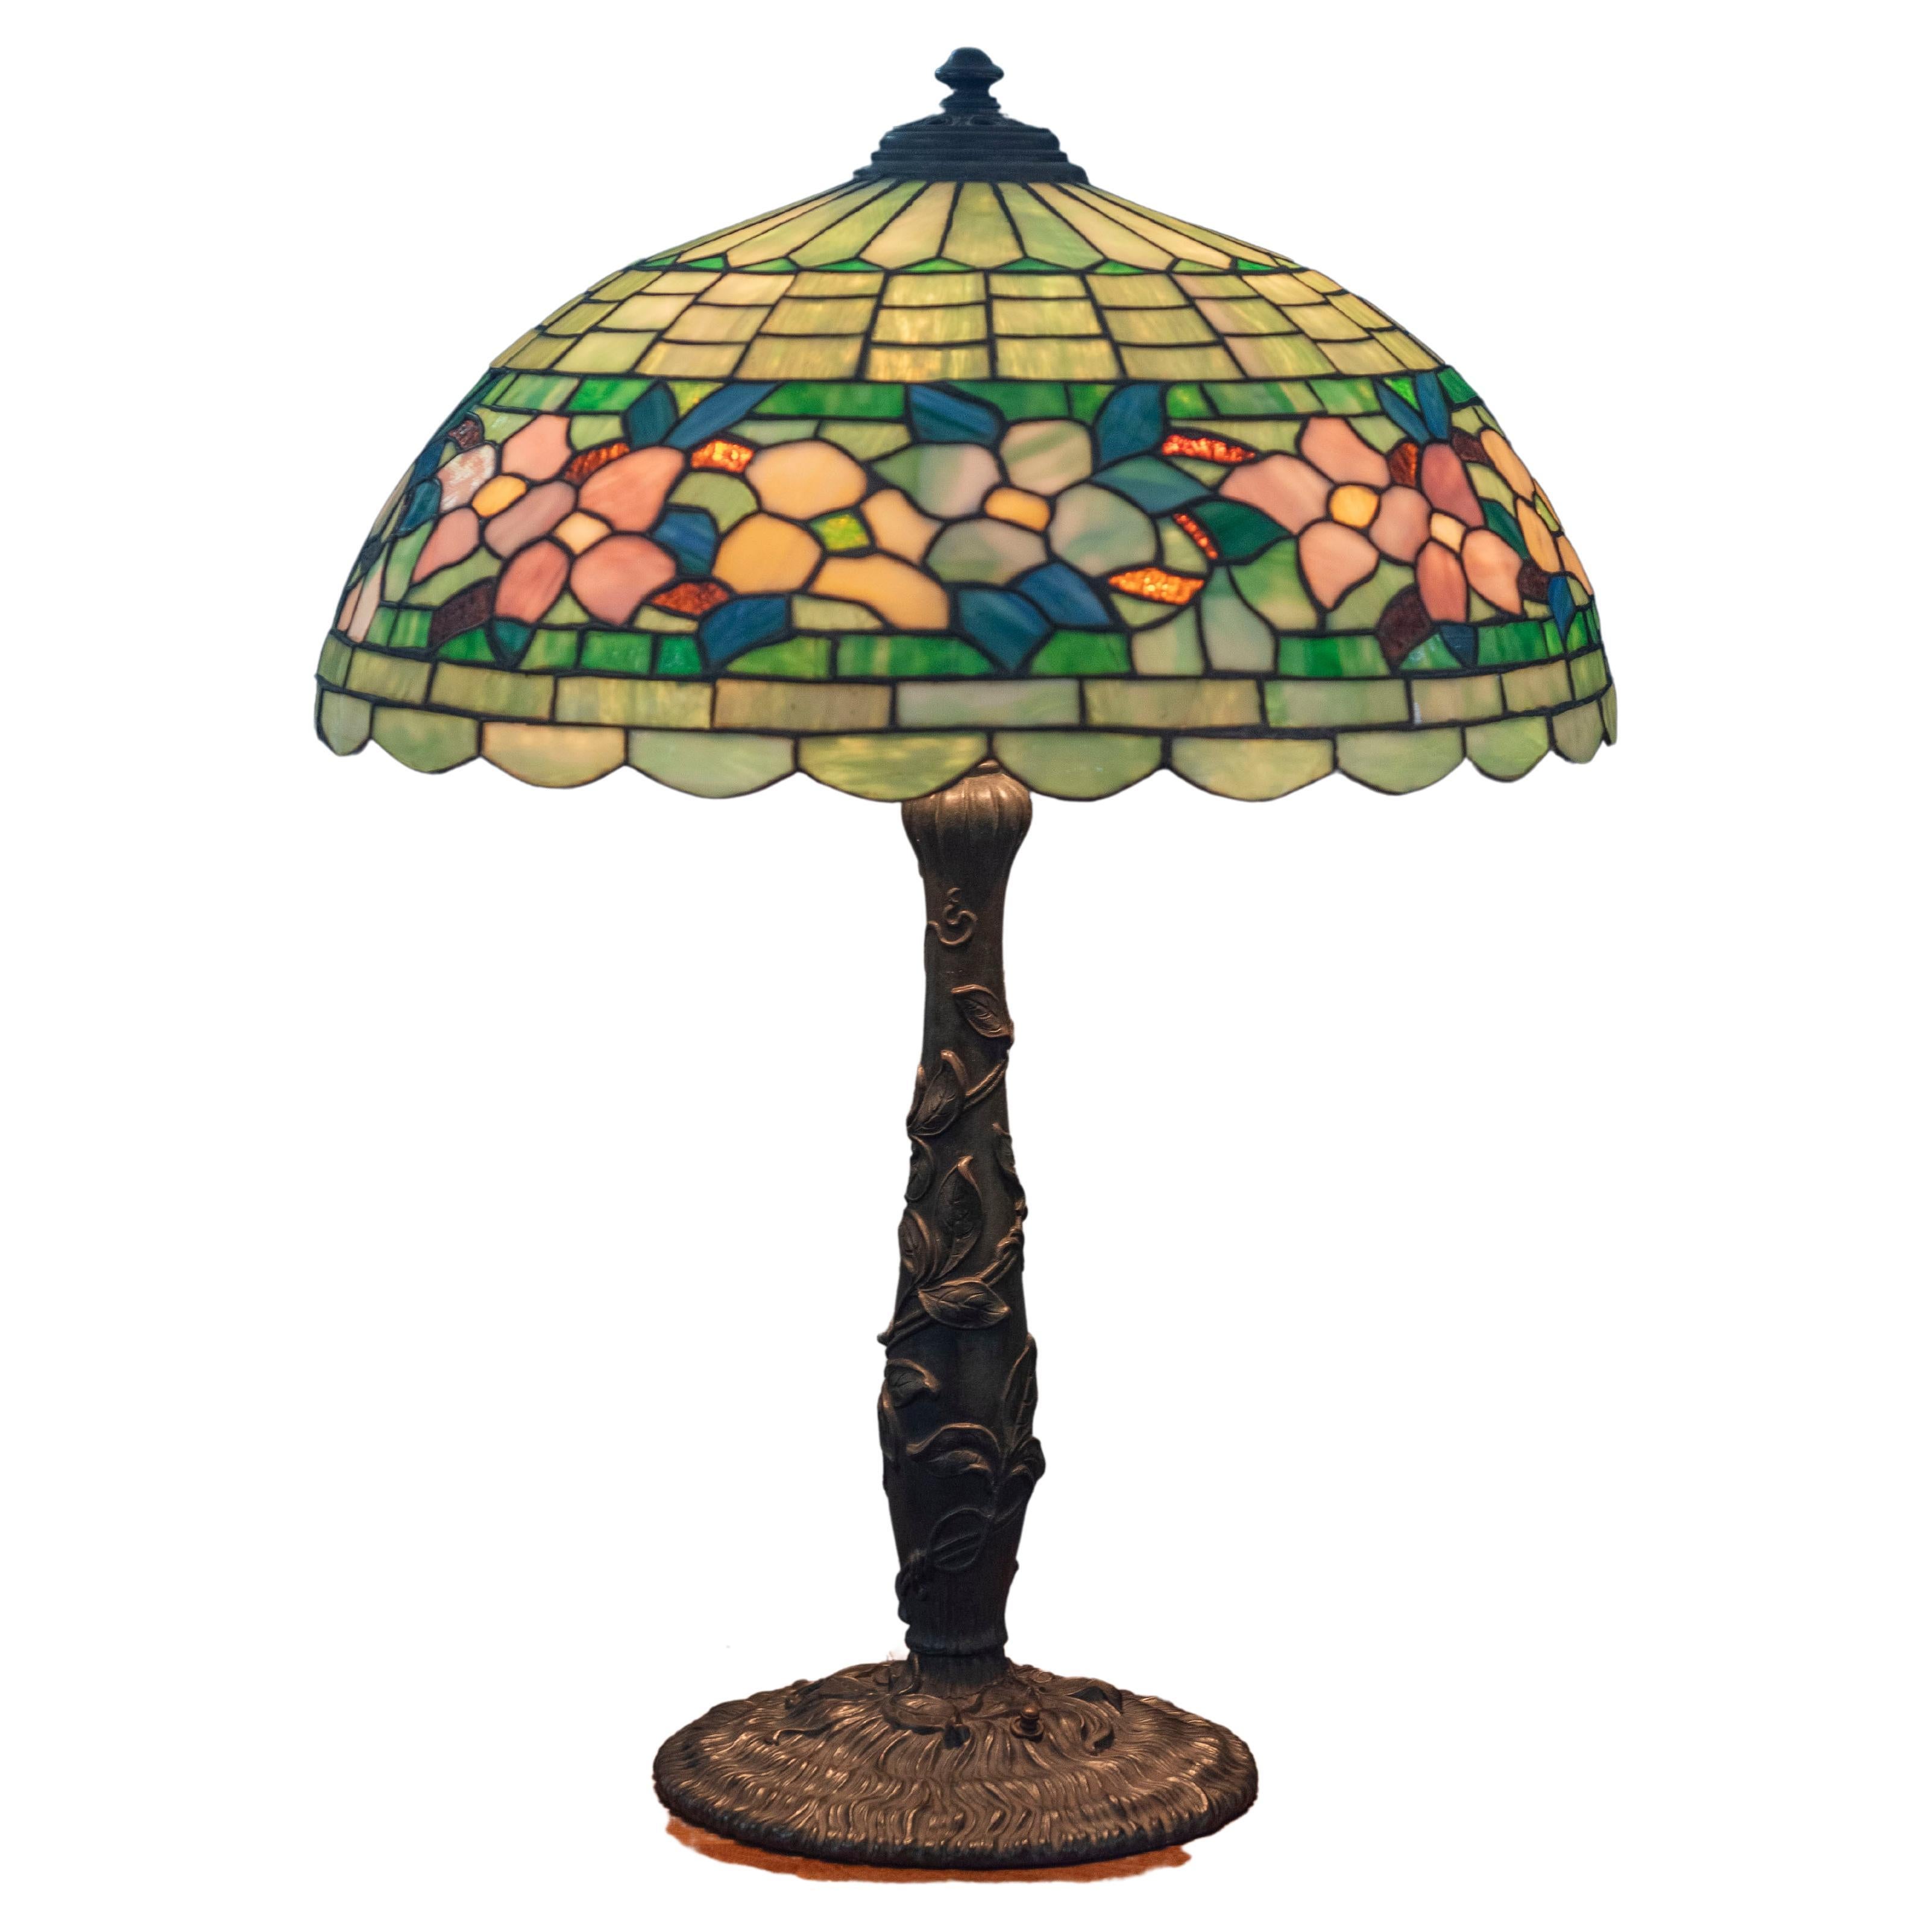 Large Antique Leaded Glass Table Lamp by Wilkinson Co. B'klyn N.Y ca. 1910